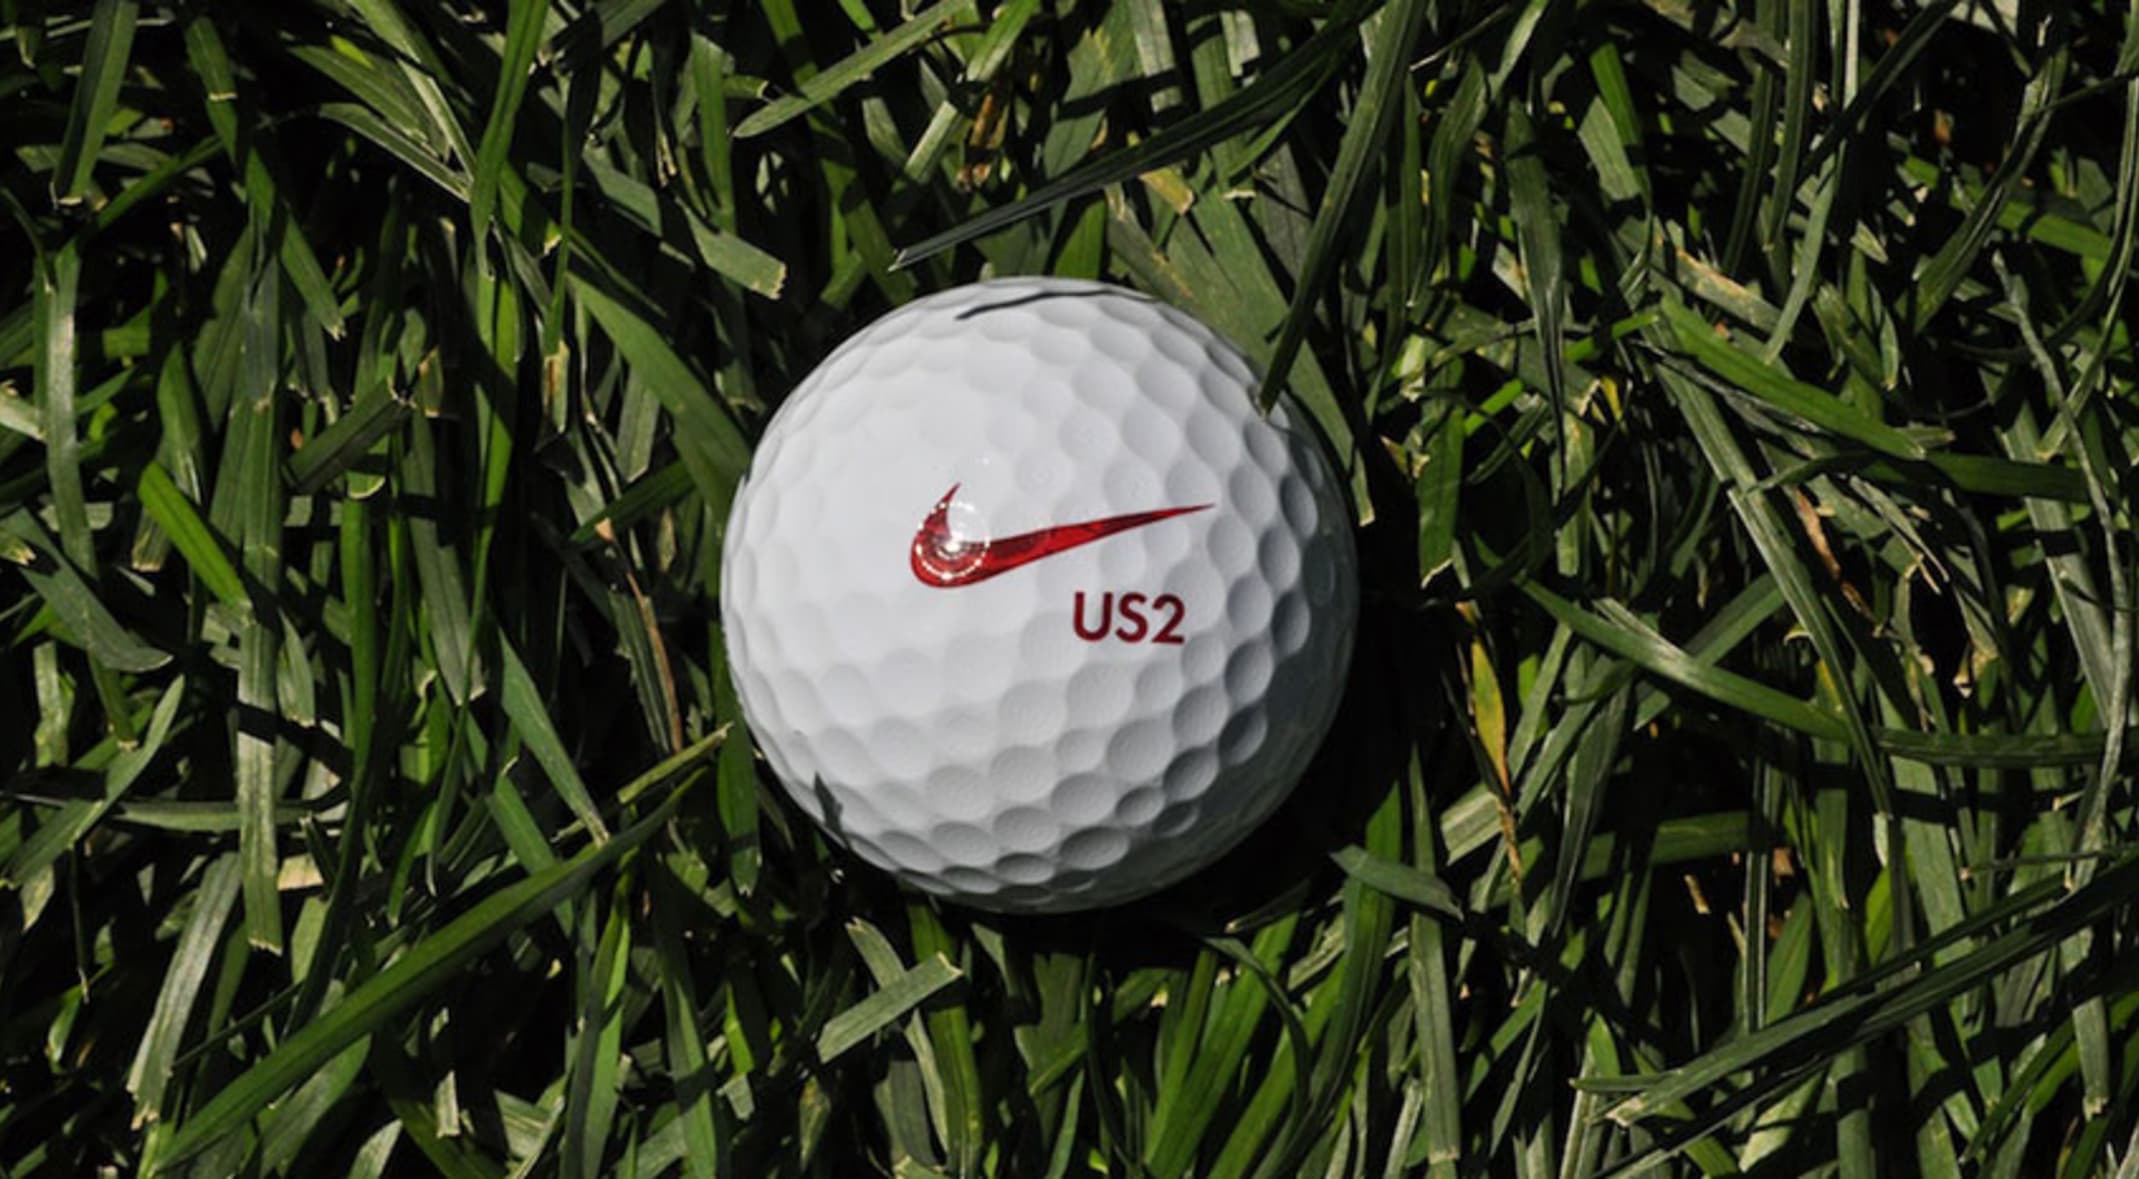 Transistor traidor entrar McIlroy to use custom Nike golf ball at U.S. Open